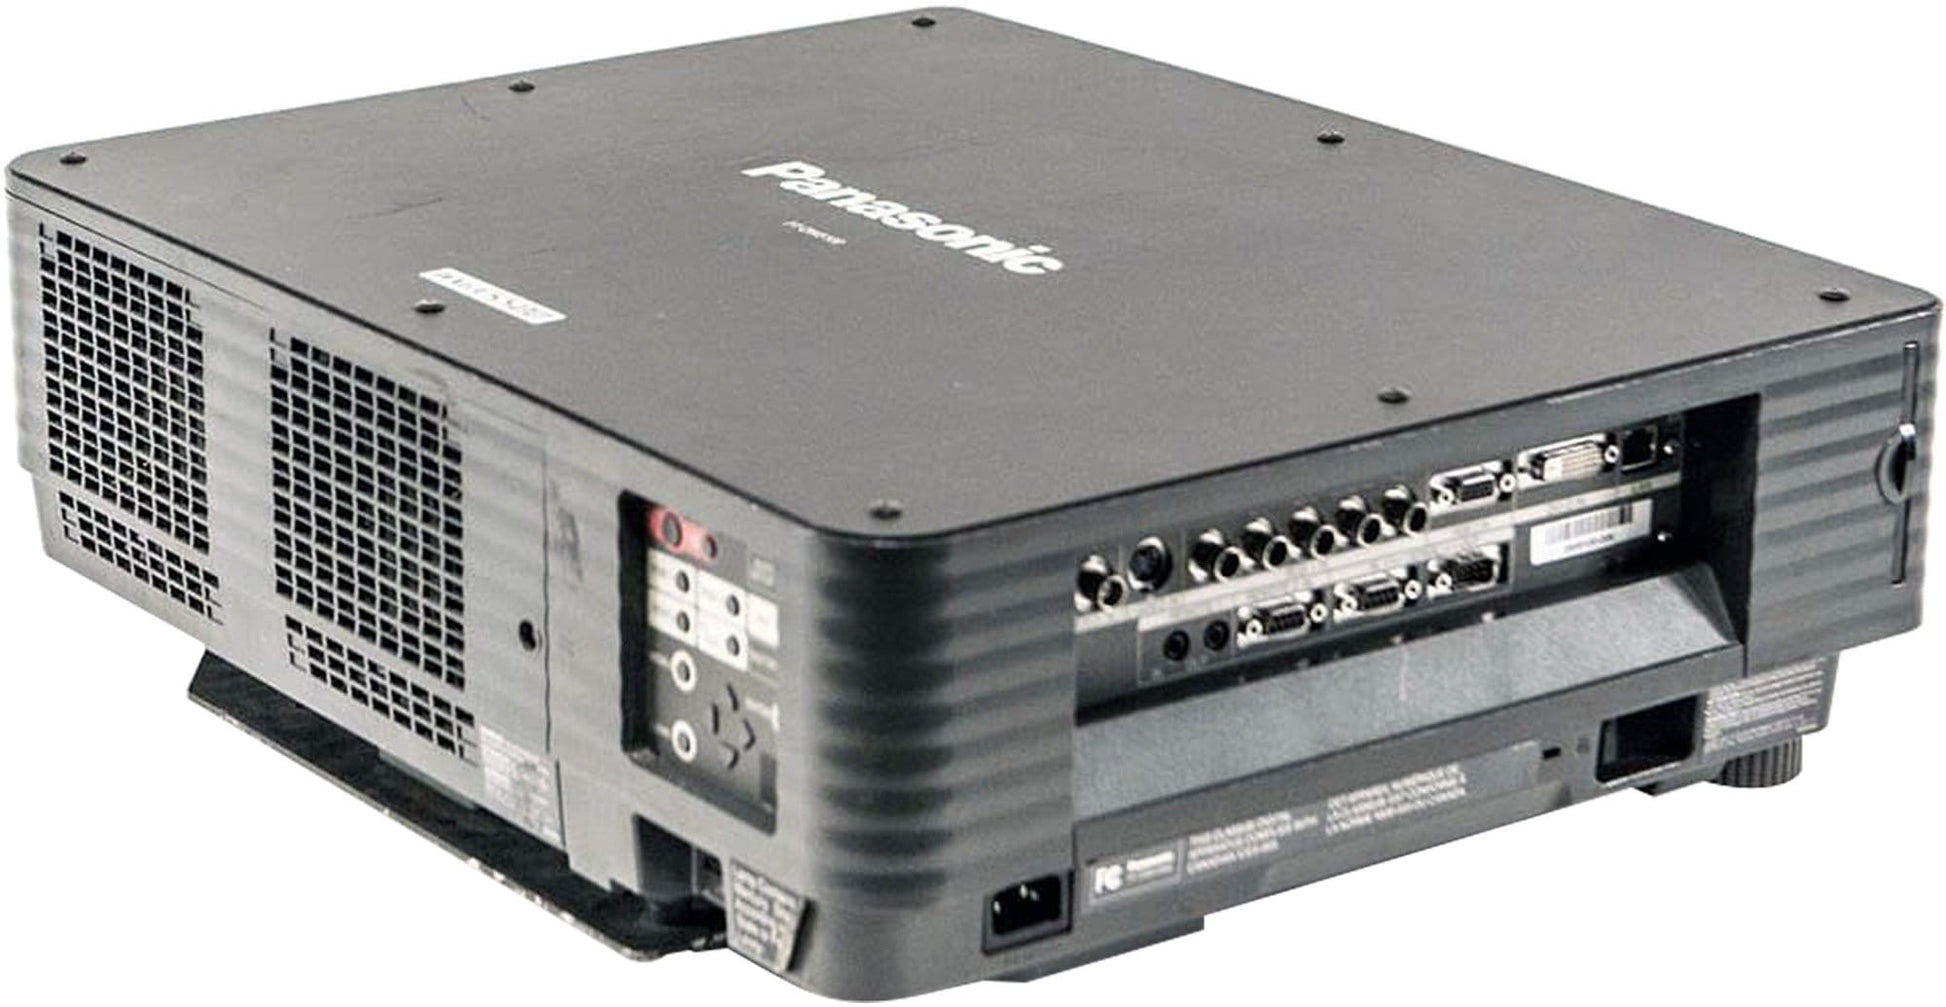 Panasonic PT-DW5100U 5,5K DLP 15:9 Video Projector - ProSound and Stage Lighting